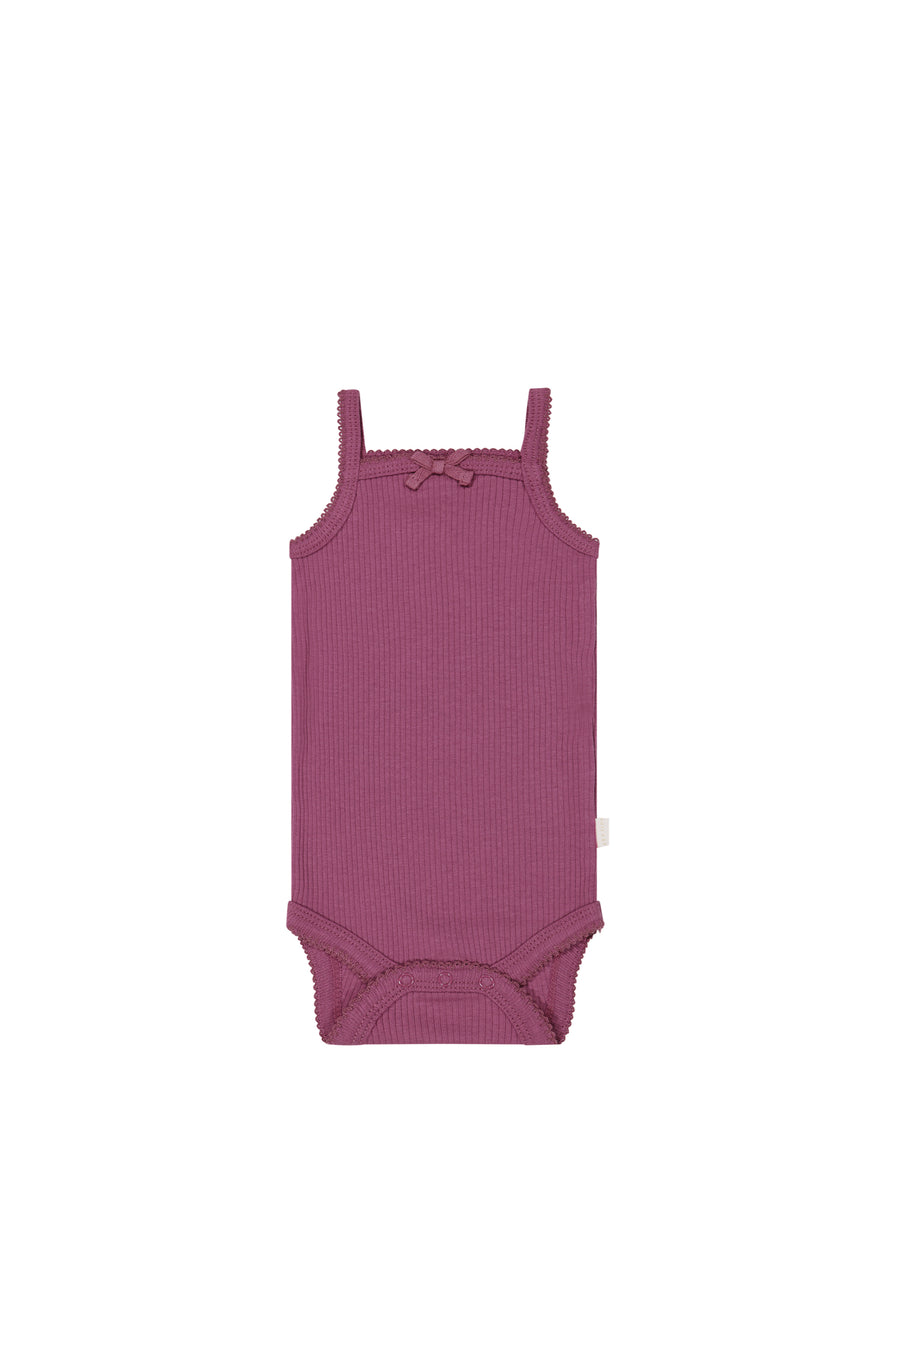 Organic Cotton Modal Singlet Bodysuit - Cranberry Childrens Bodysuit from Jamie Kay NZ